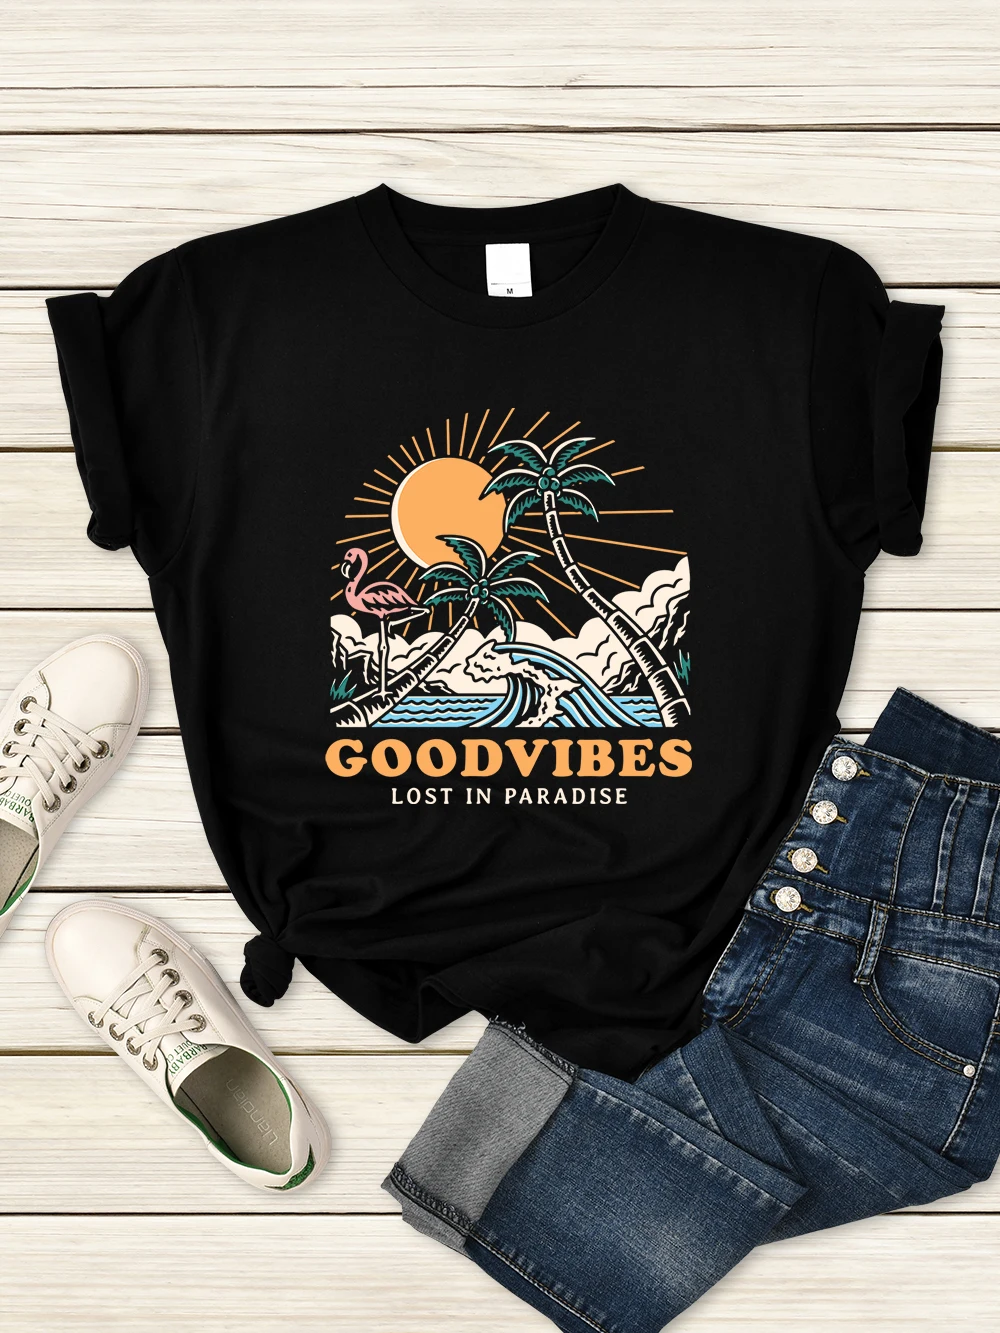 

Женская футболка Goodvibes Lost In Paradise, Повседневная Свободная футболка для загара, уличная Базовая футболка, летние футболки в стиле хип-хоп